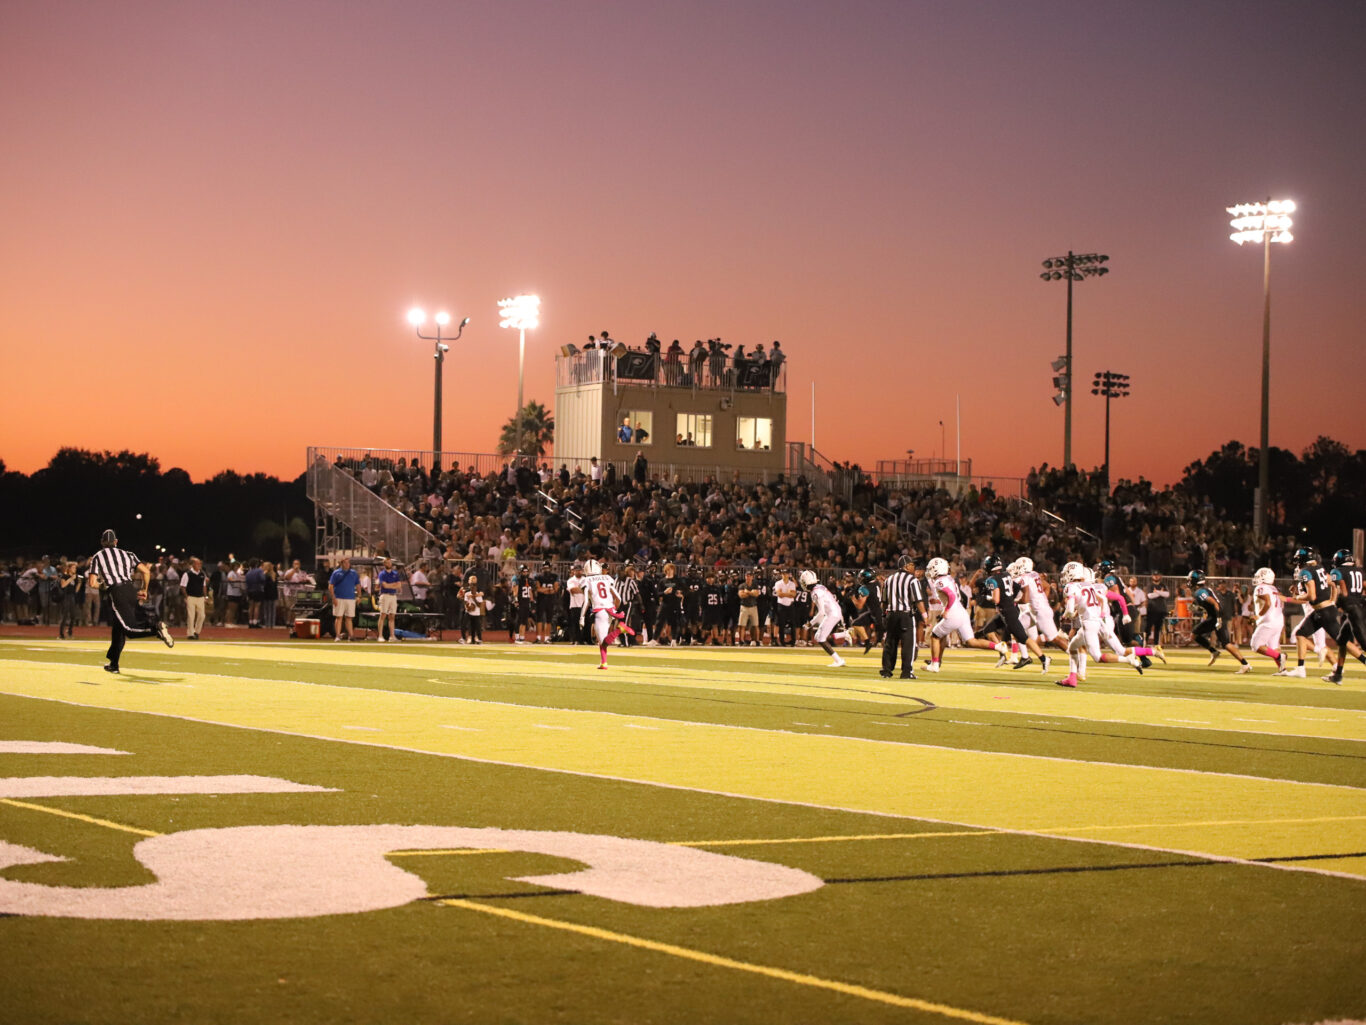 A football field at dusk.